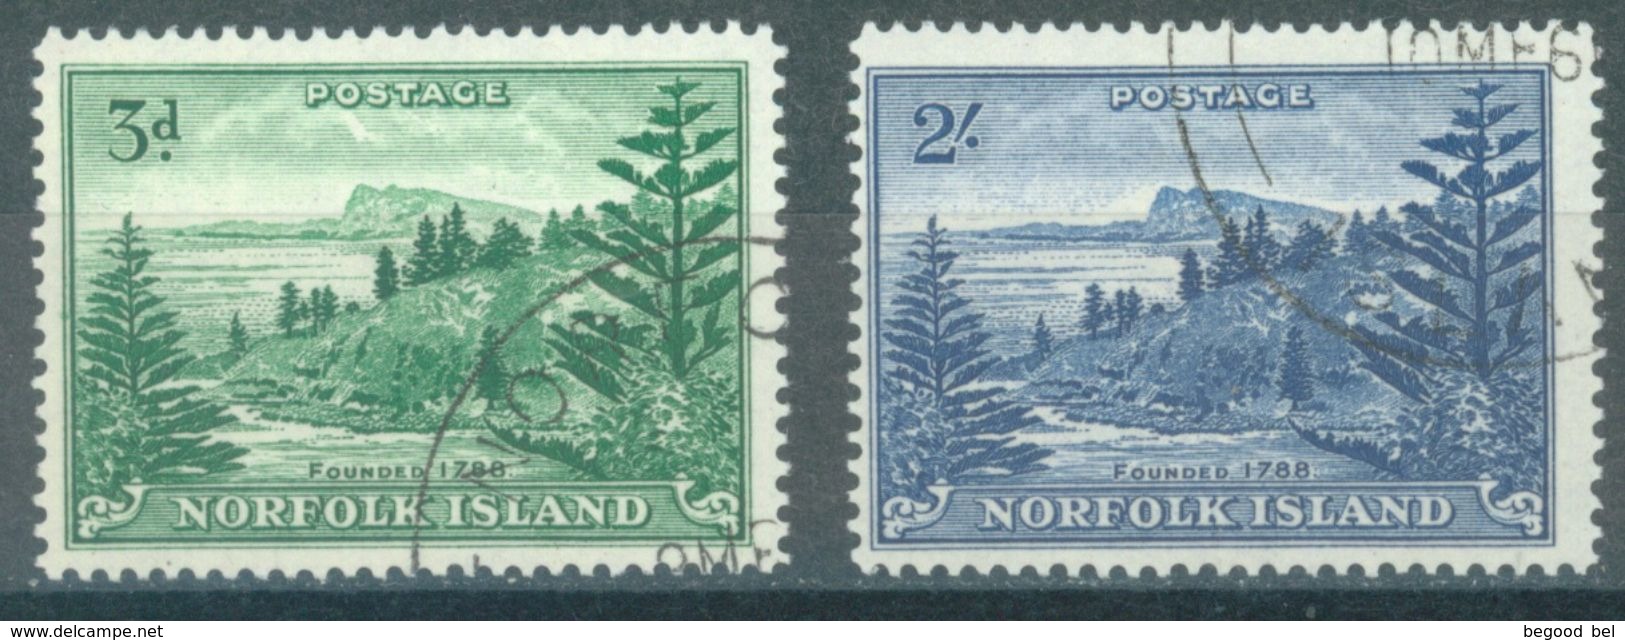 NORFOLK ISLAND - USED/OBLIT. - 1959 - BALL BAY - Yv 23-24 ASC 7 14 - Lot 17510 - Ile Norfolk